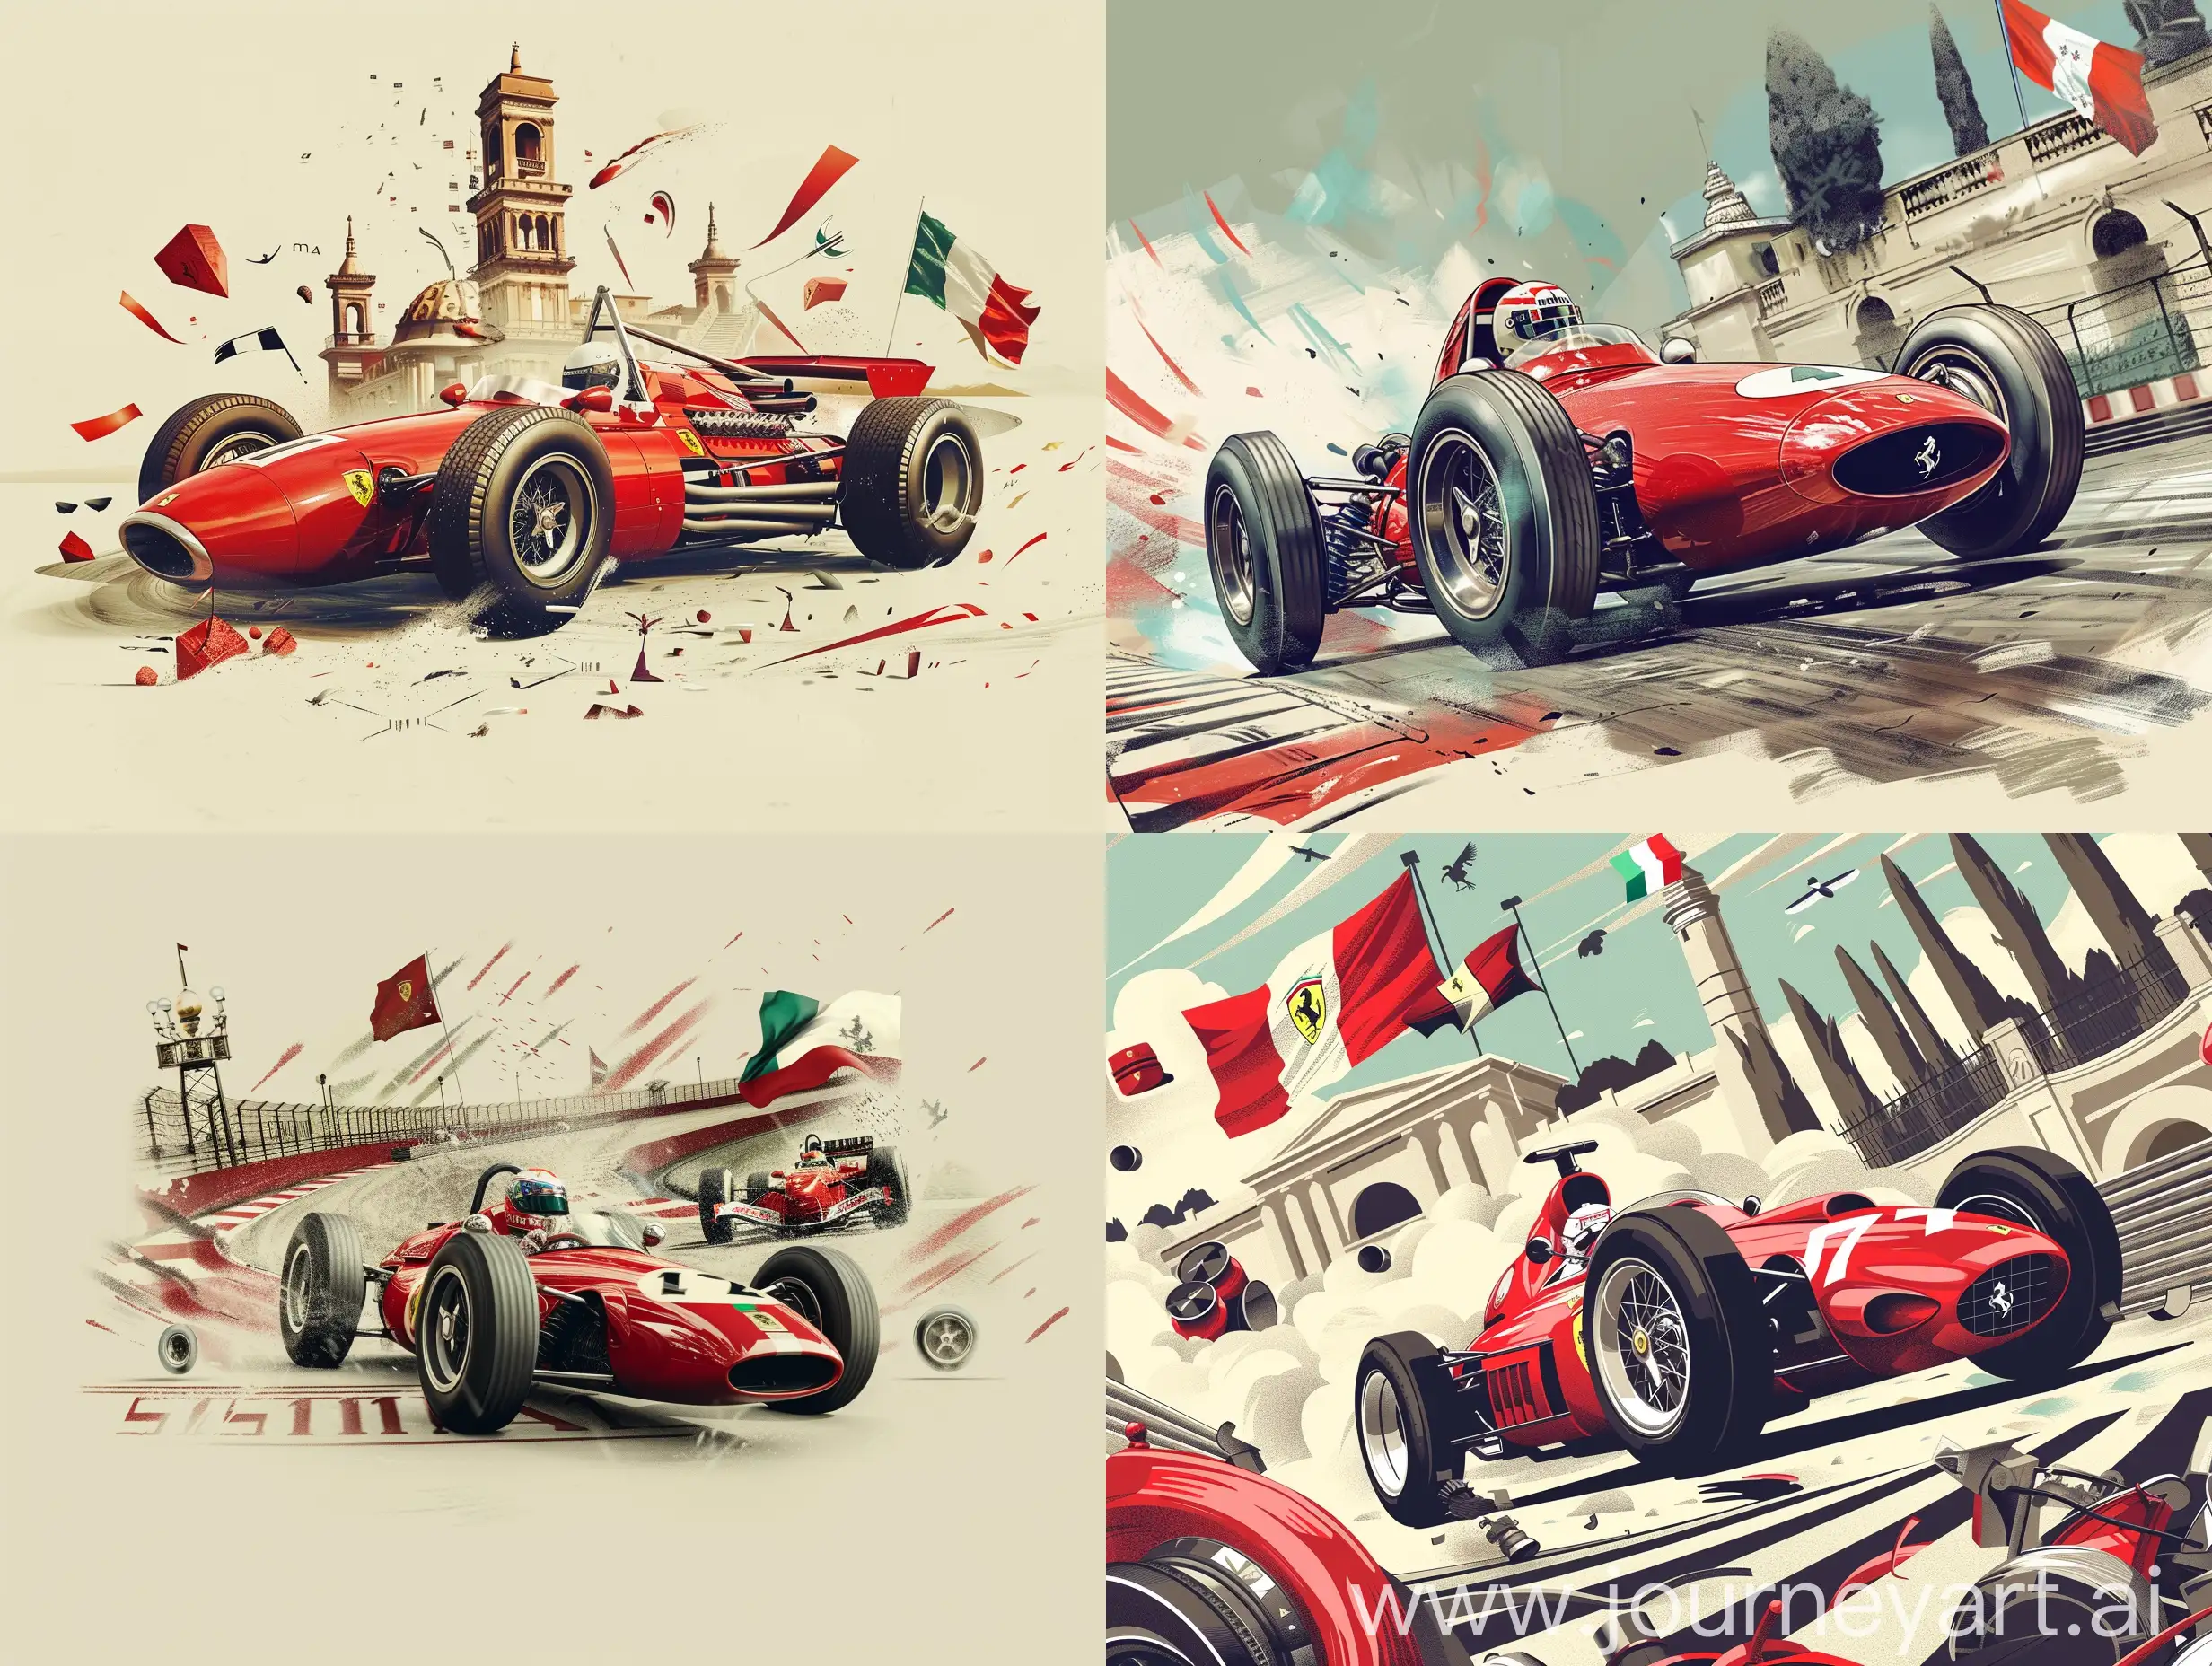 Iconic-Red-Ferrari-F1-Racing-Car-on-Historic-Track